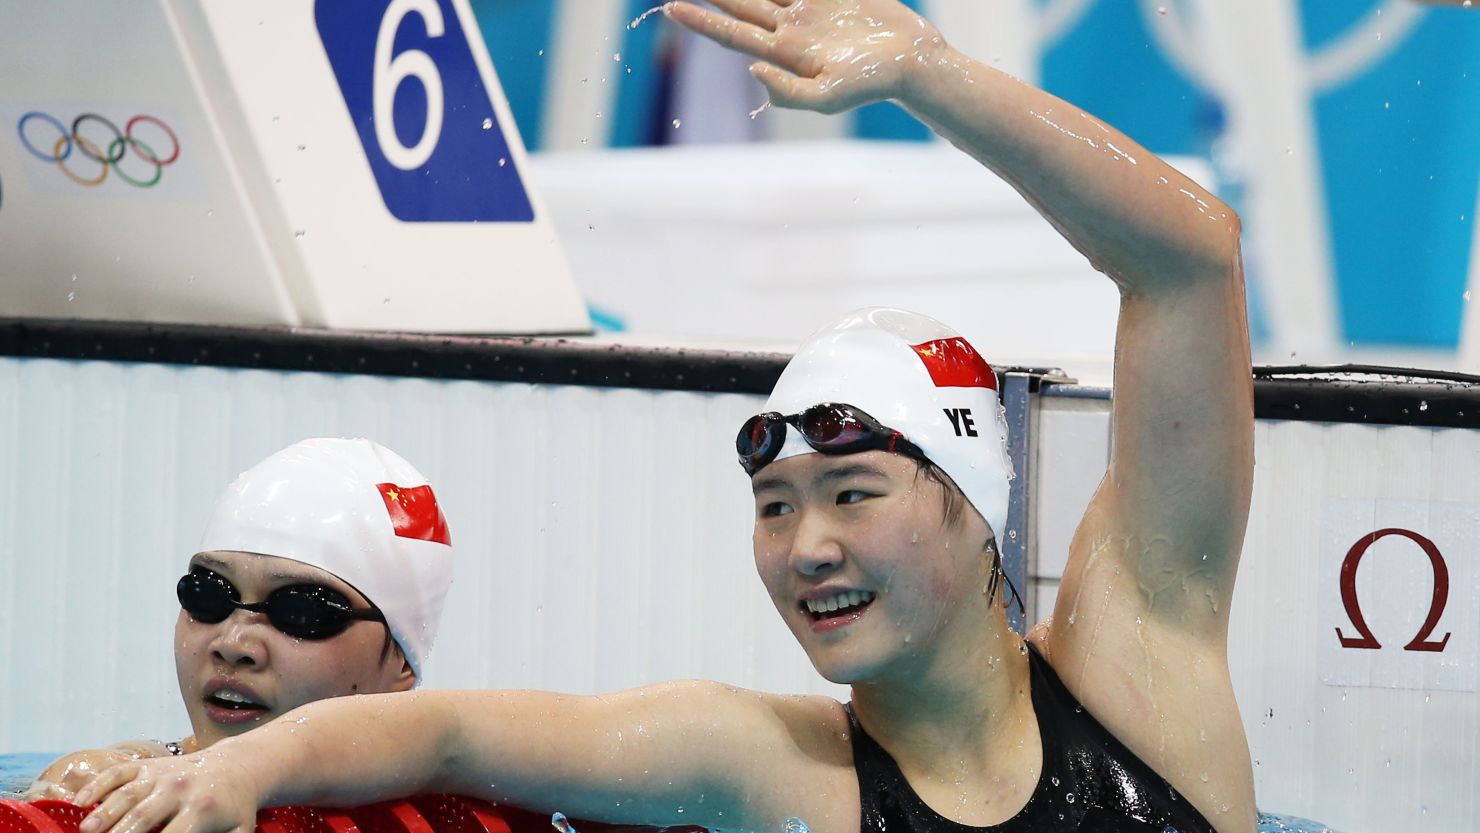 Swimmer Ye Shiwen, 16, raises her hand after winning the 400m race. 